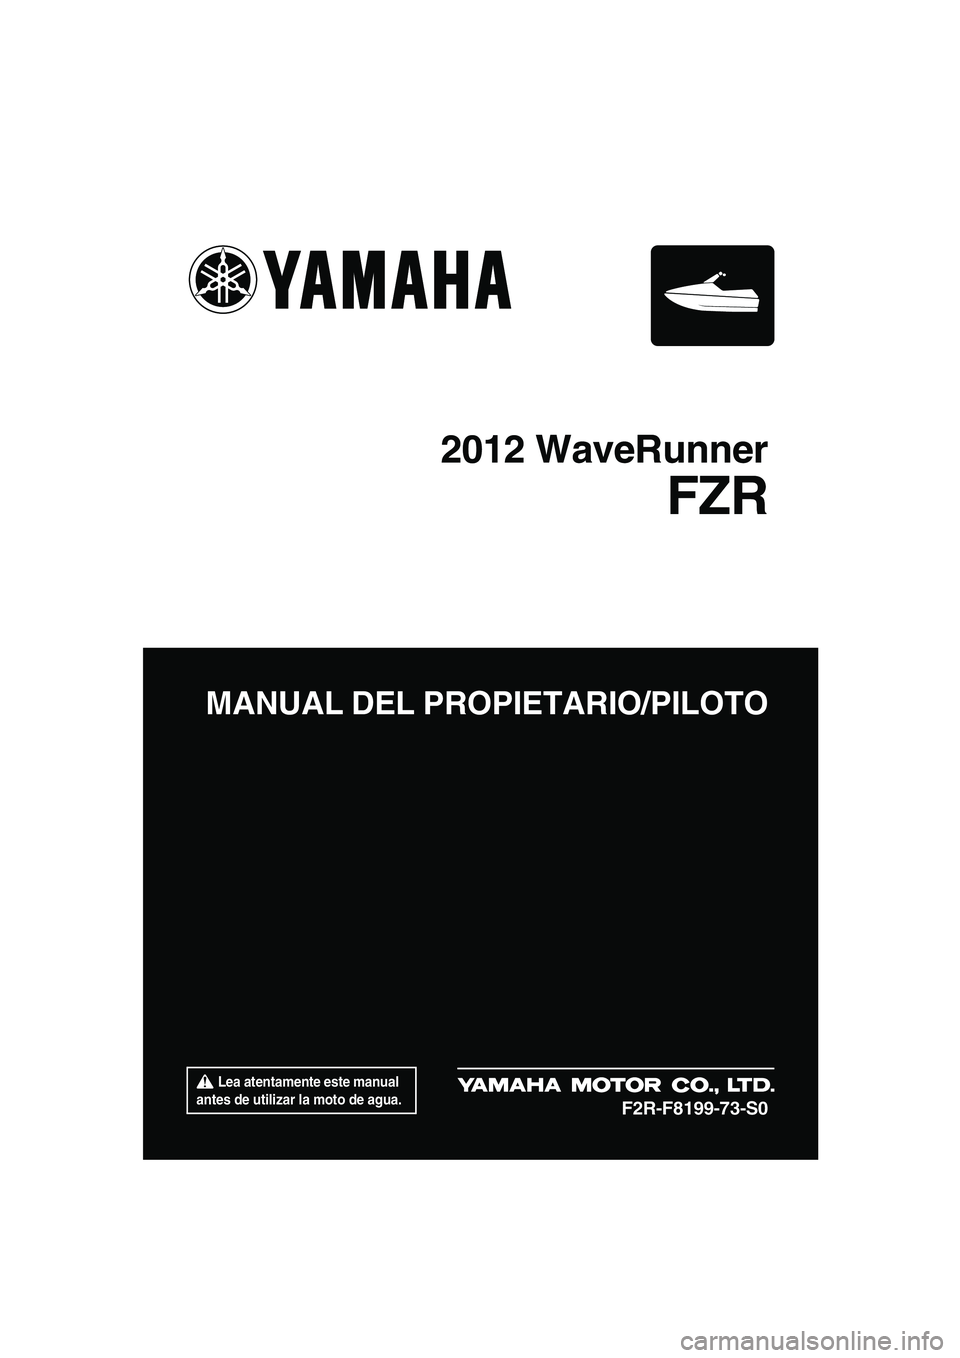 YAMAHA FZR 2012  Manuale de Empleo (in Spanish)  Lea atentamente este manual 
antes de utilizar la moto de agua.
MANUAL DEL PROPIETARIO/PILOTO
2012 WaveRunner
FZR
F2R-F8199-73-S0
UF2R73S0.book  Page 1  Wednesday, June 29, 2011  2:12 PM 